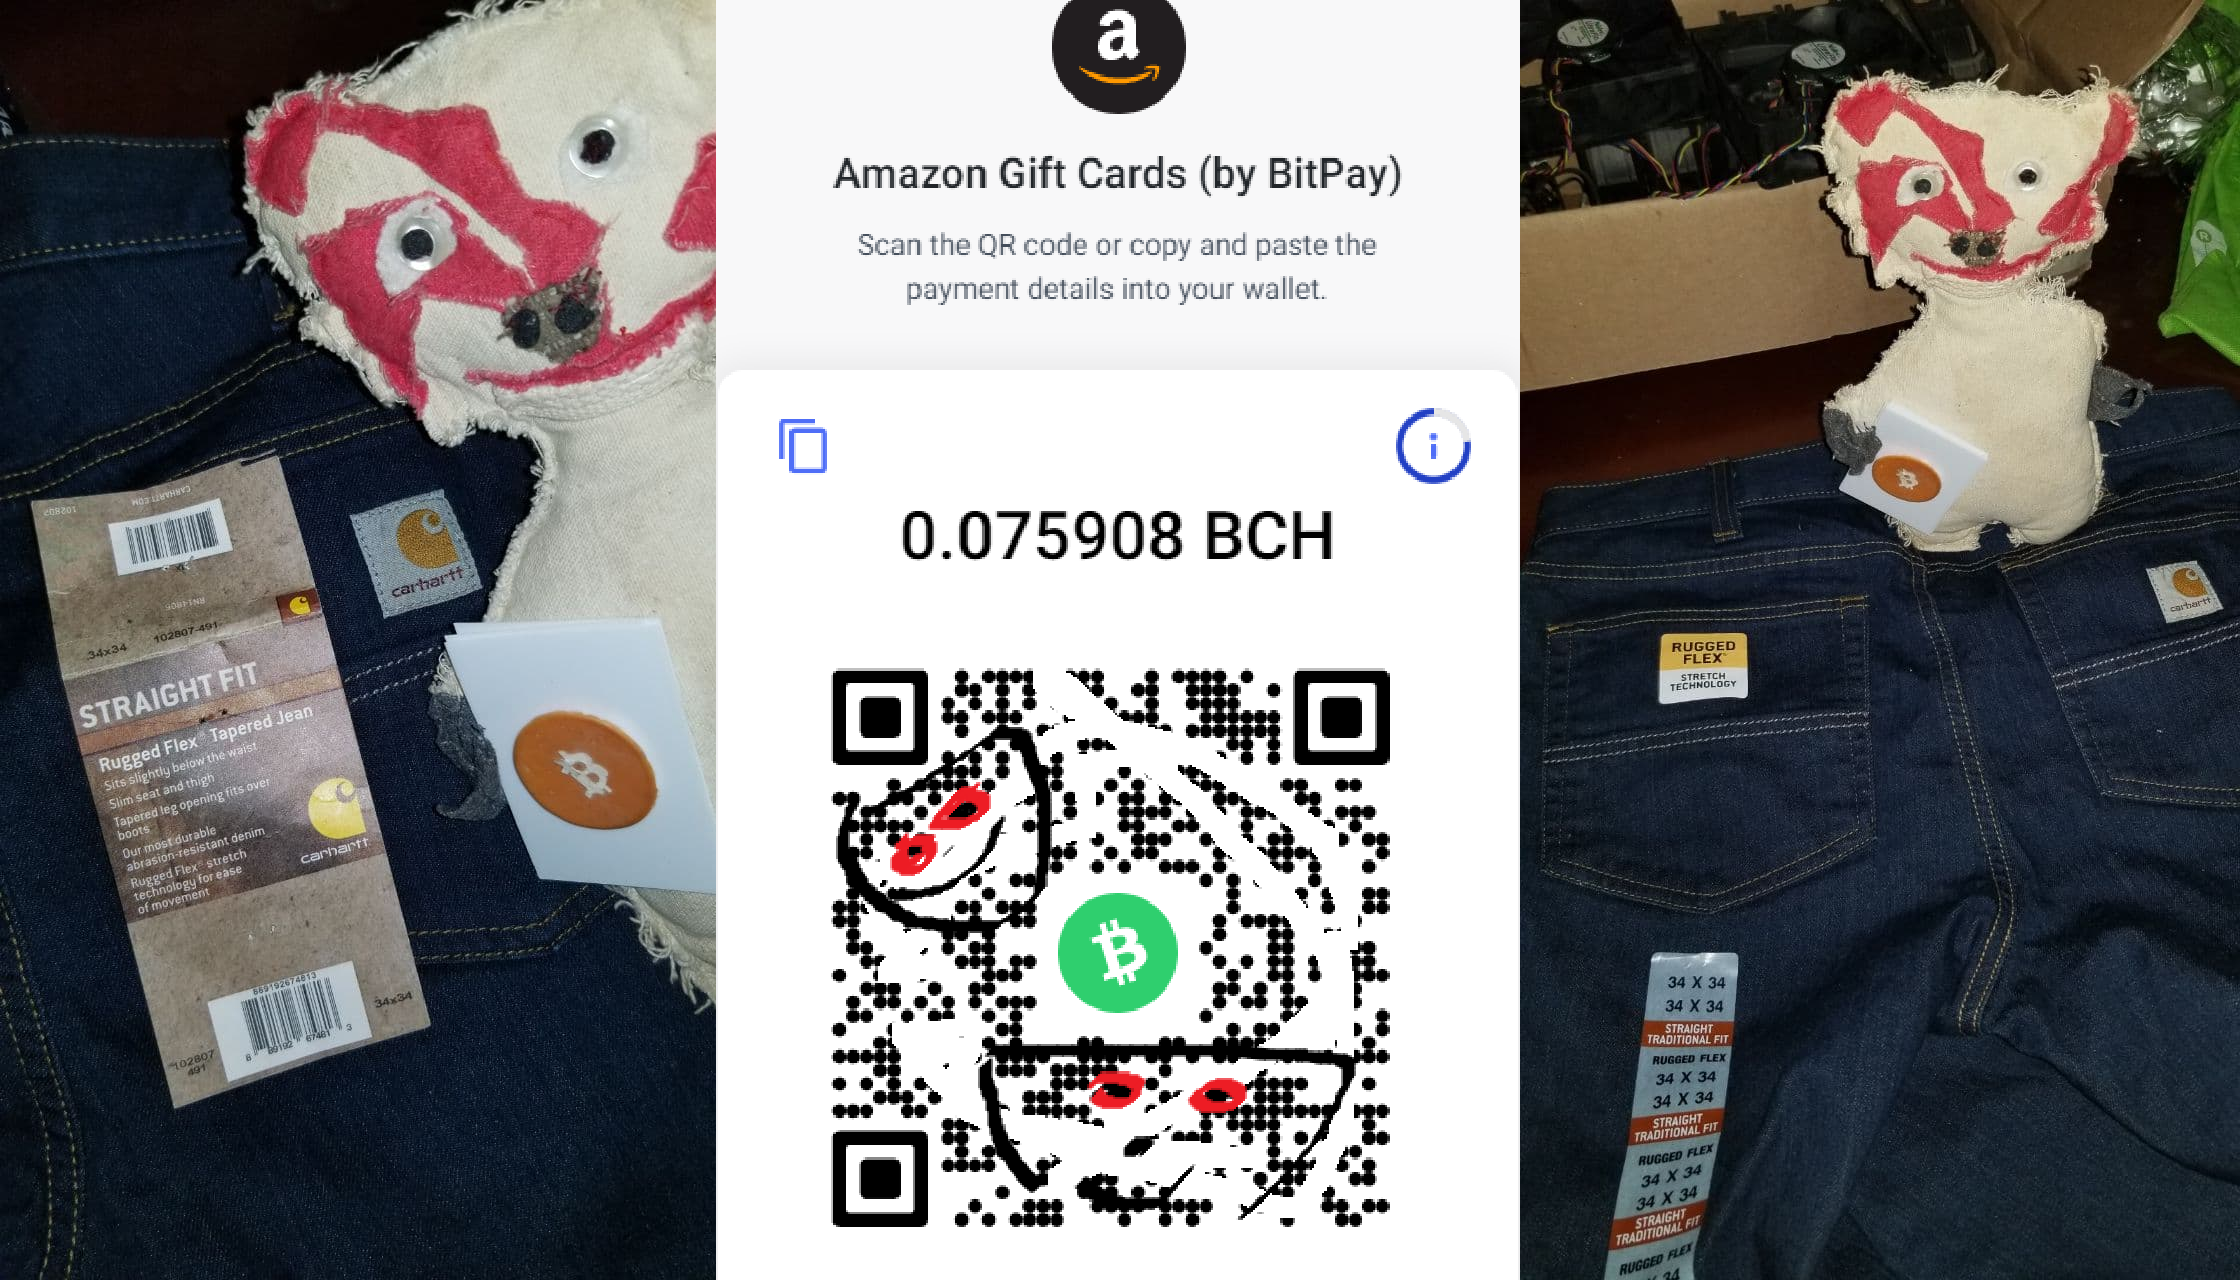 bitcoin-amazon-payment-method-bitpay-brave-browser-extension-bitcoin-btc-bitcoin-cash-bch-luke-nandibear-carhartt-jeans-2021-a